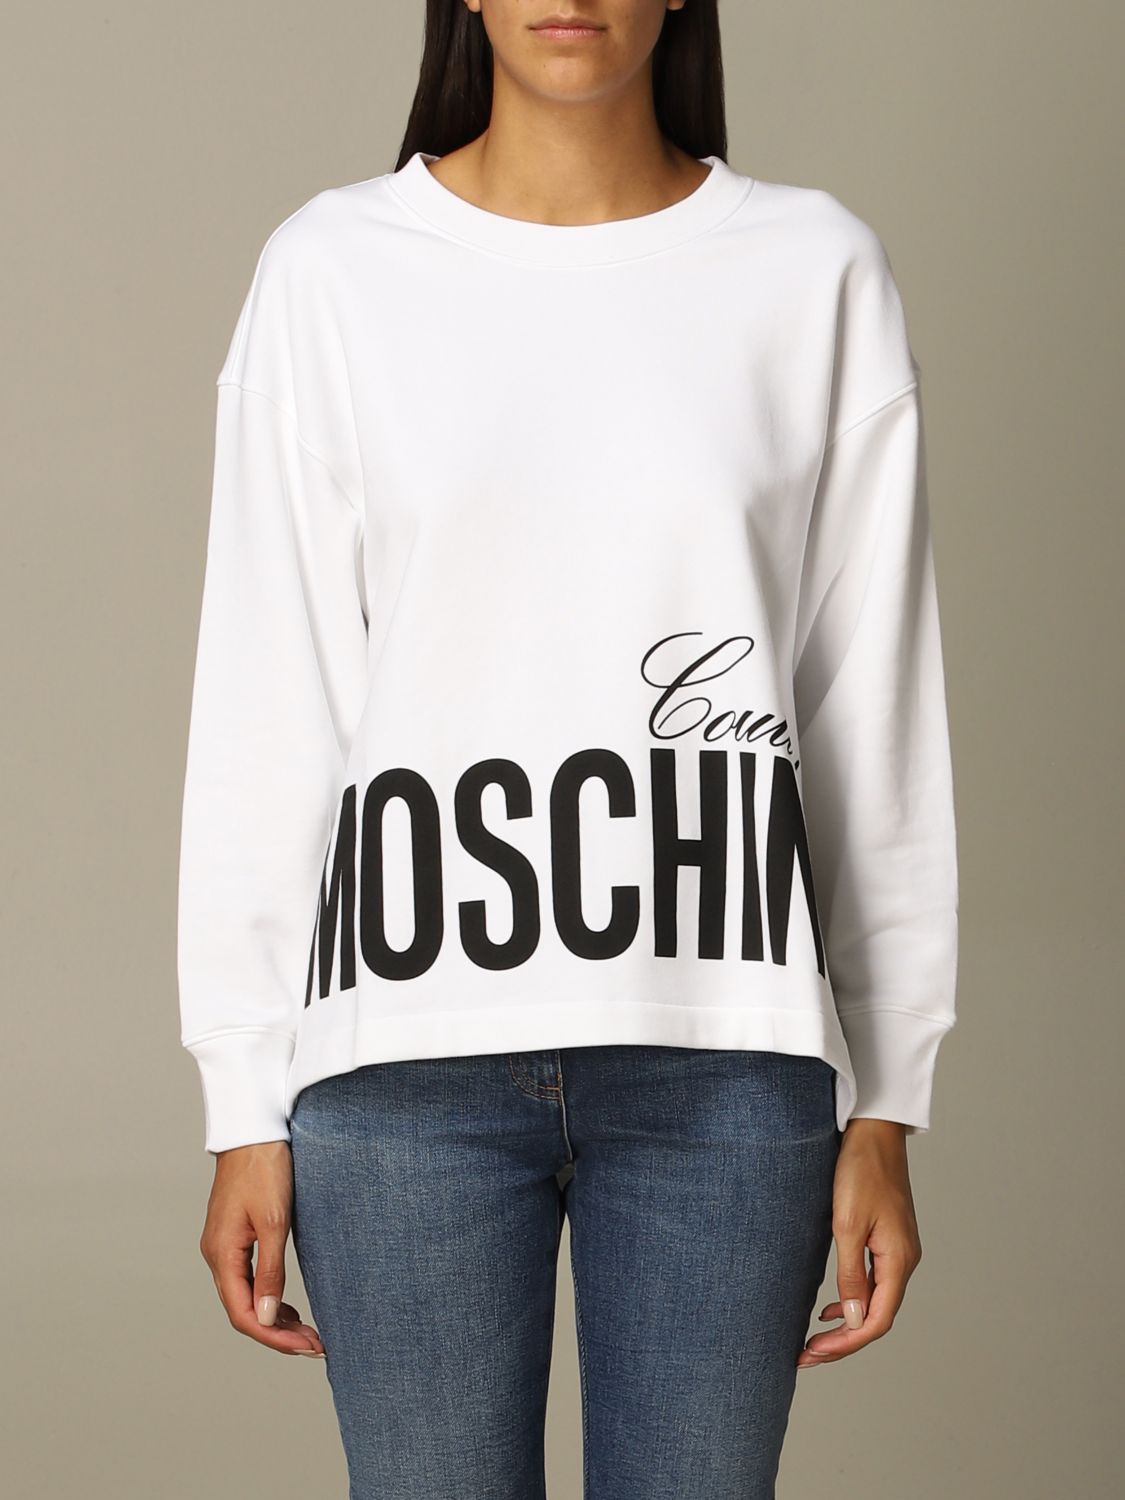 Sweatshirt Moschino Couture 1704 0527 